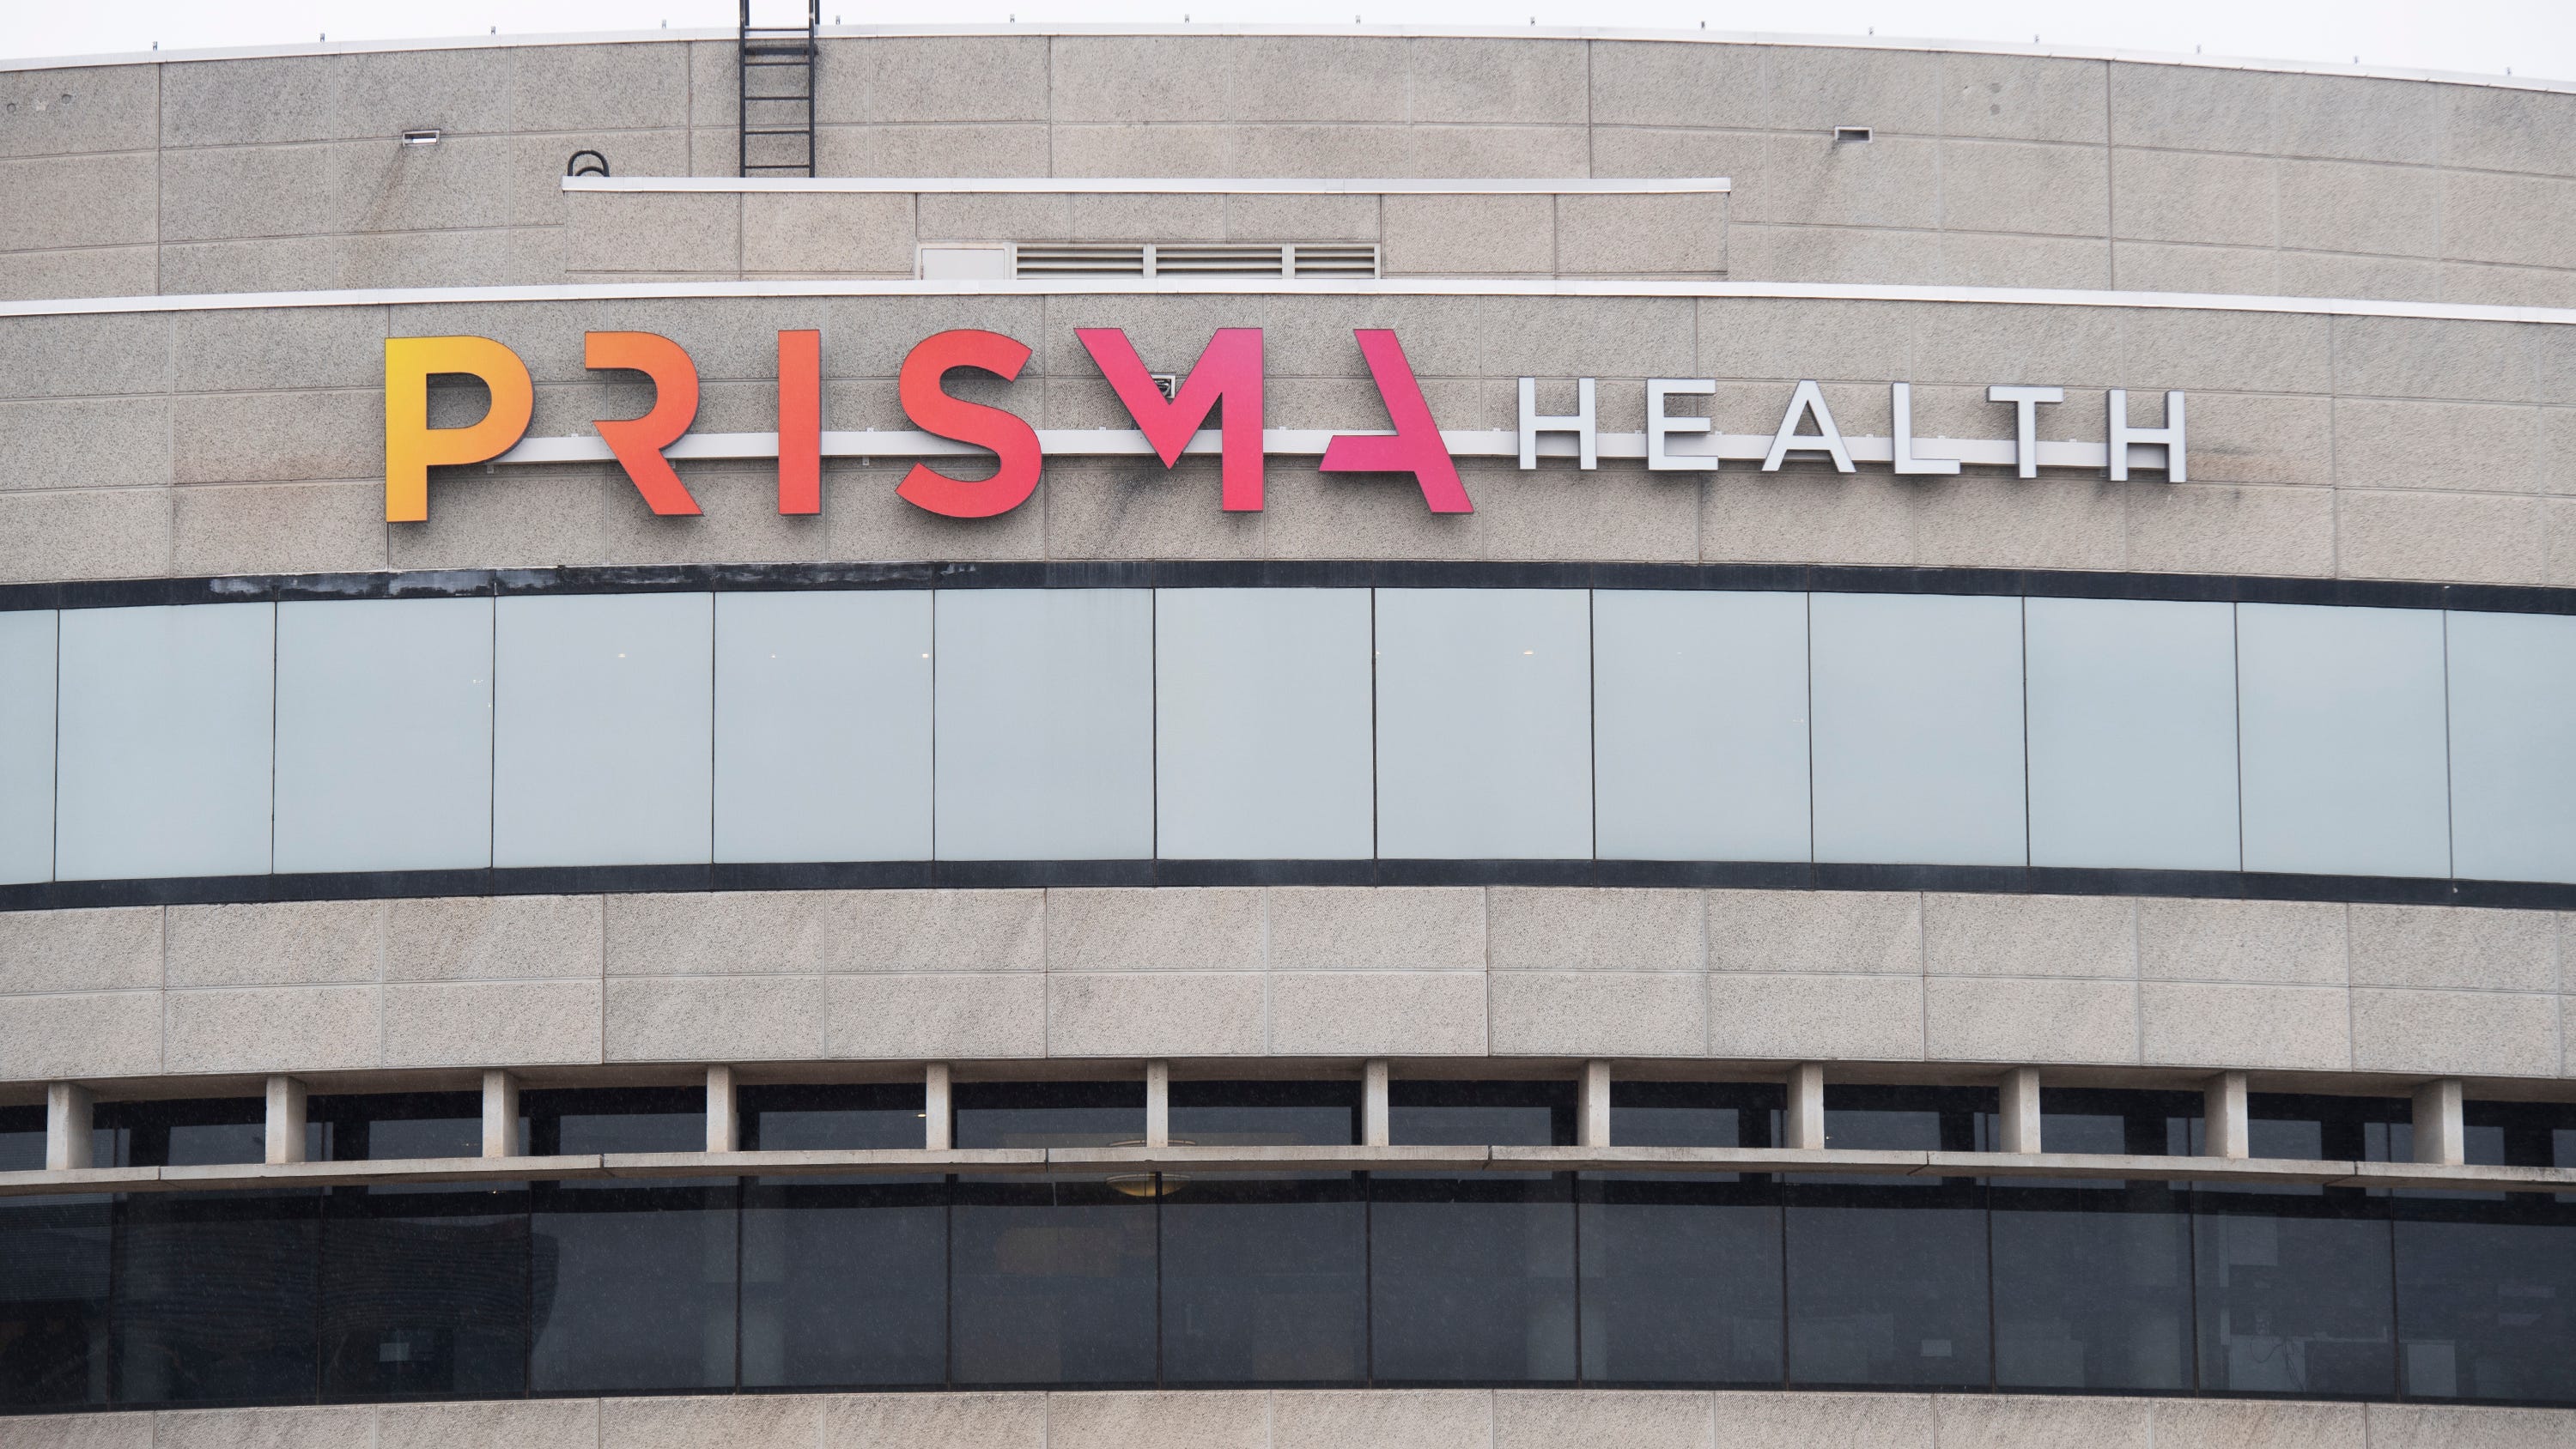 Who owns Prisma hospital?